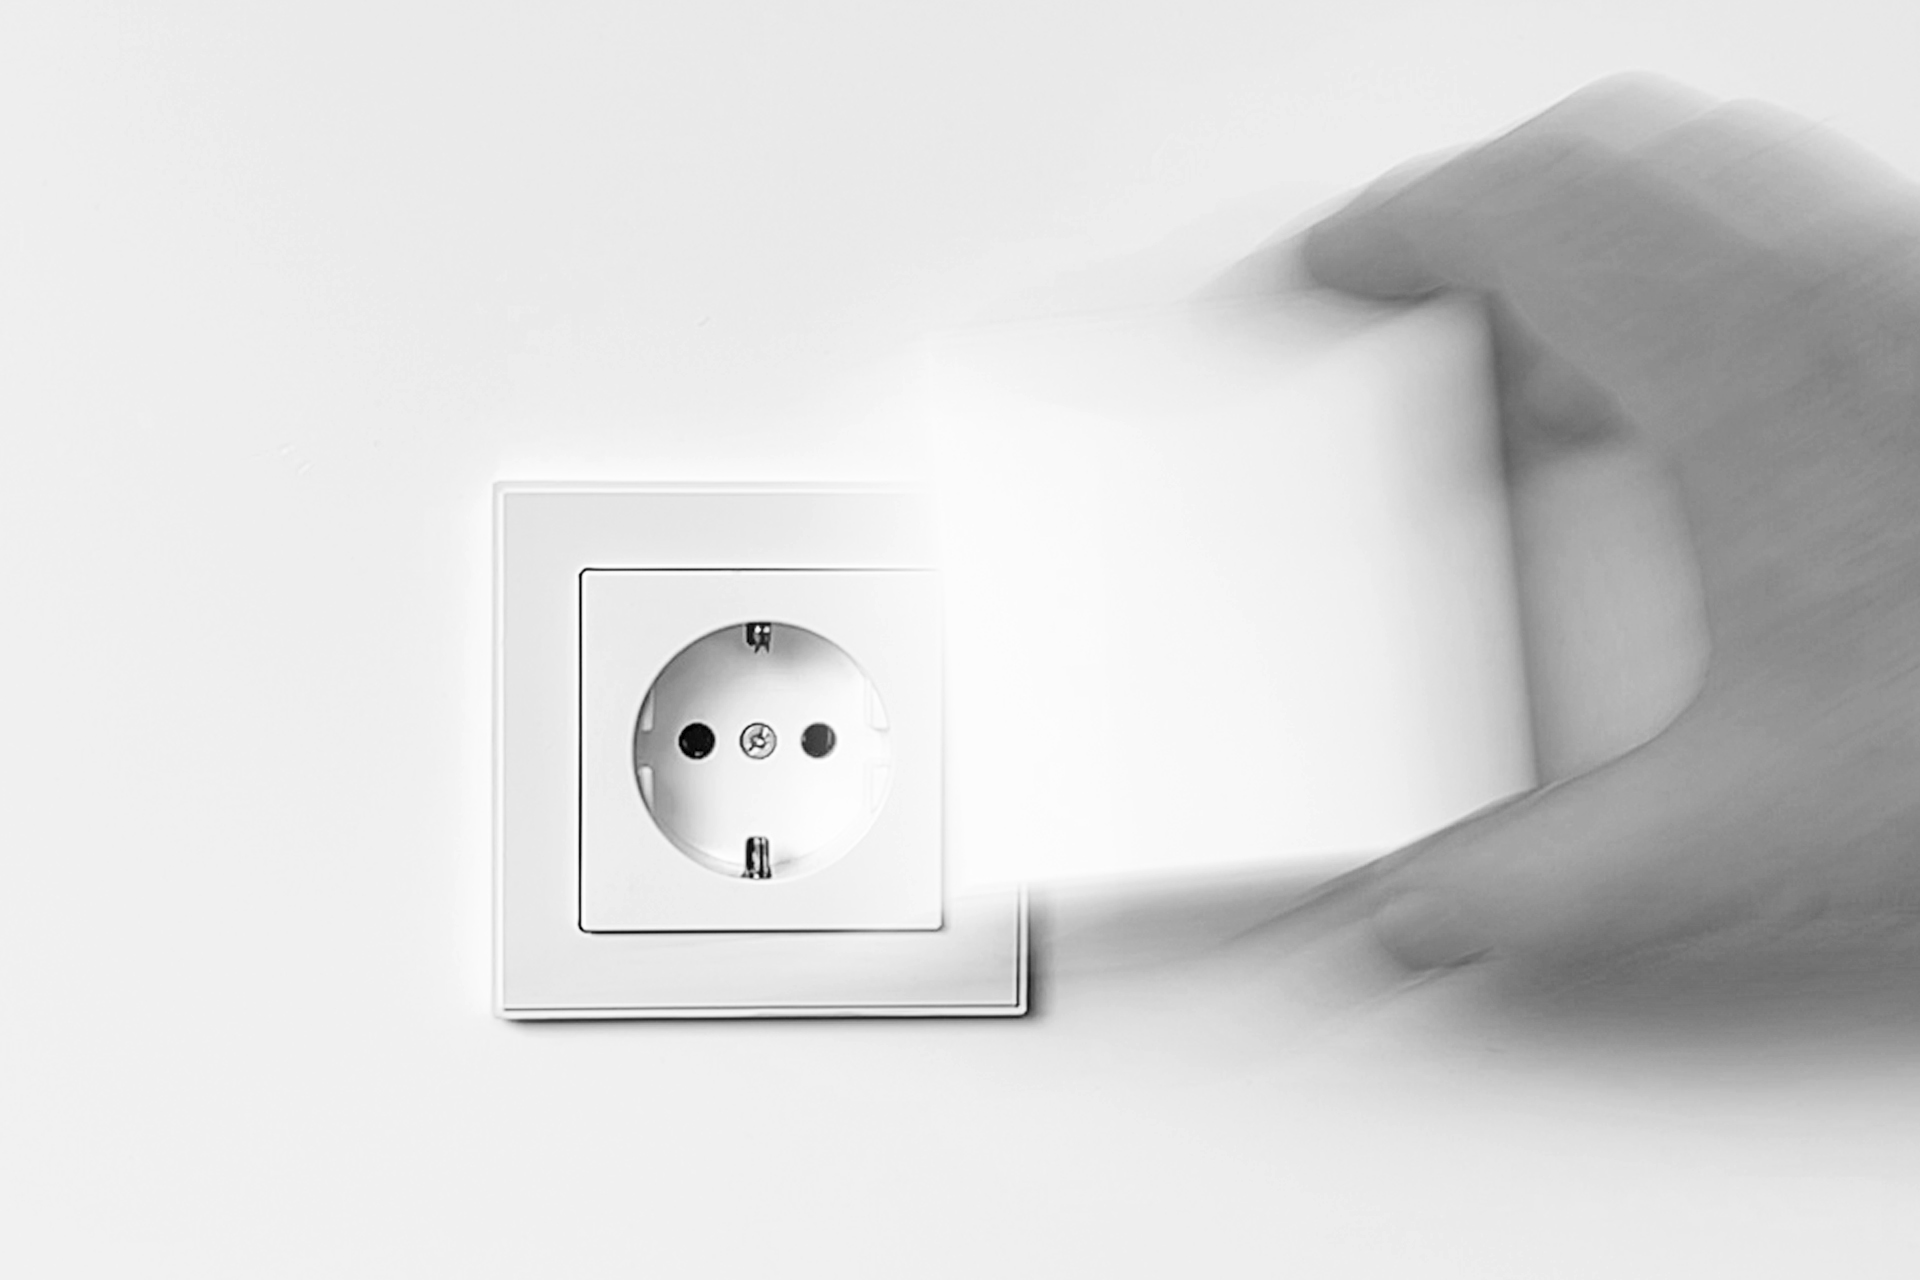 Socket outlet with cover 1-fold, alpine white. Design socket and kitchen socket outlet.